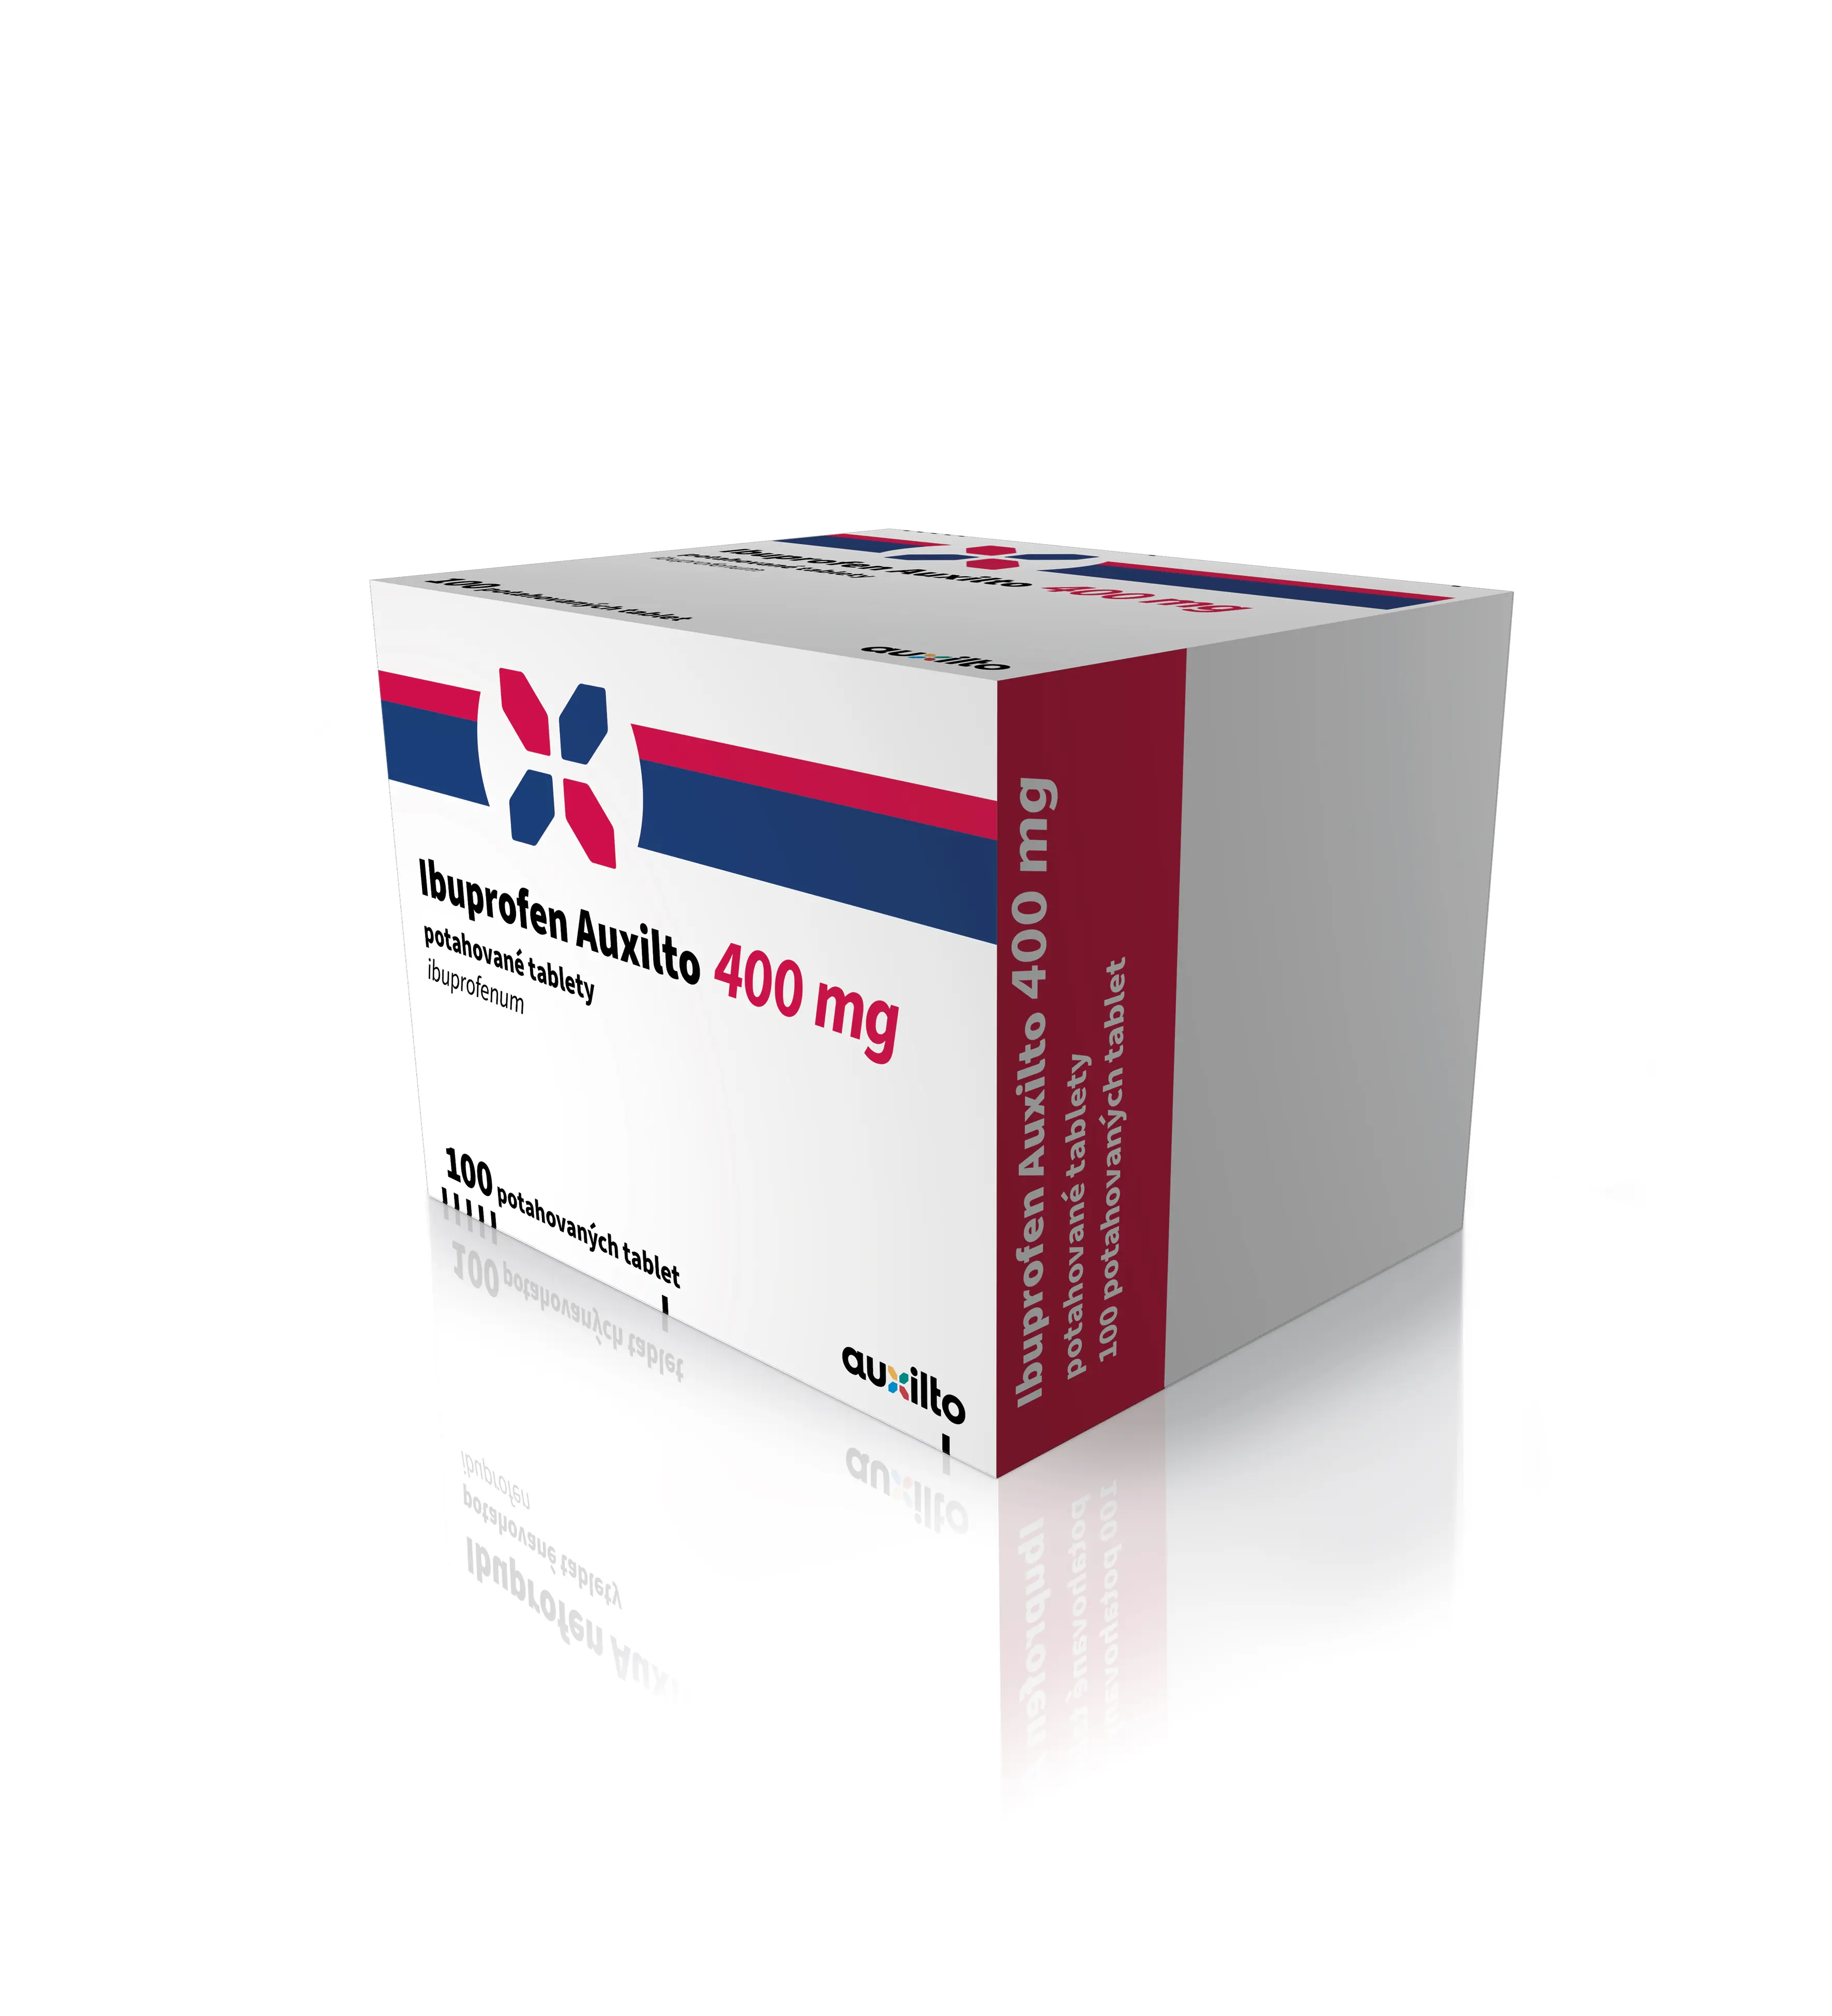 Ibuprofen Auxilto 400 mg tbl.flm. 100